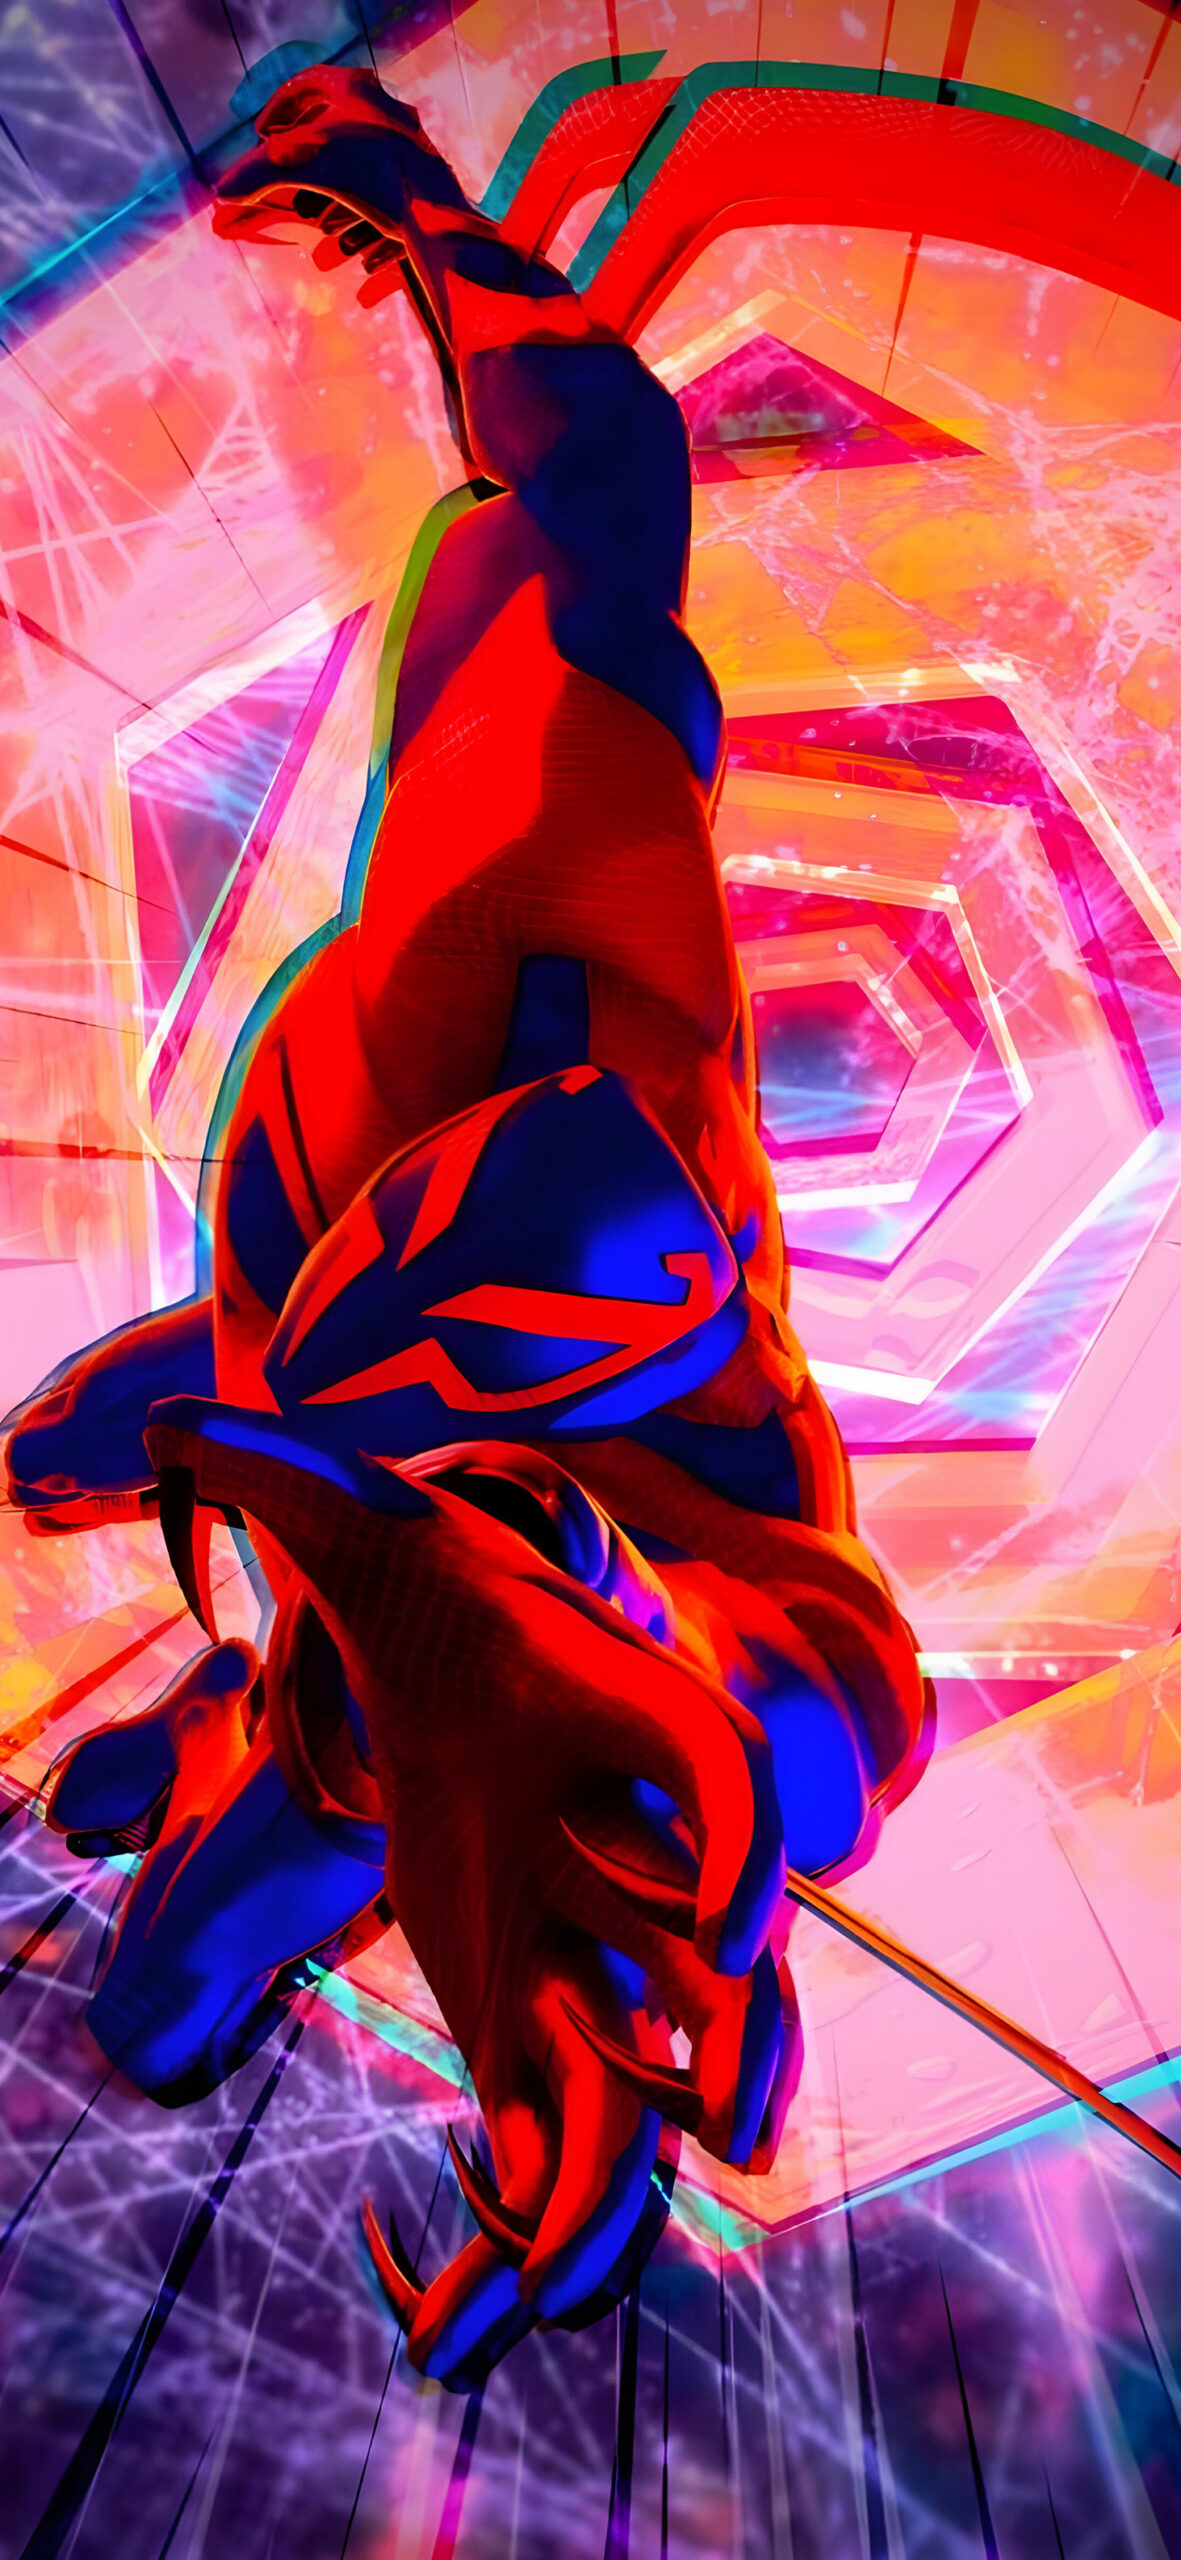 Marvel spider man 2099 abstract wallpaper Cool superhero art w